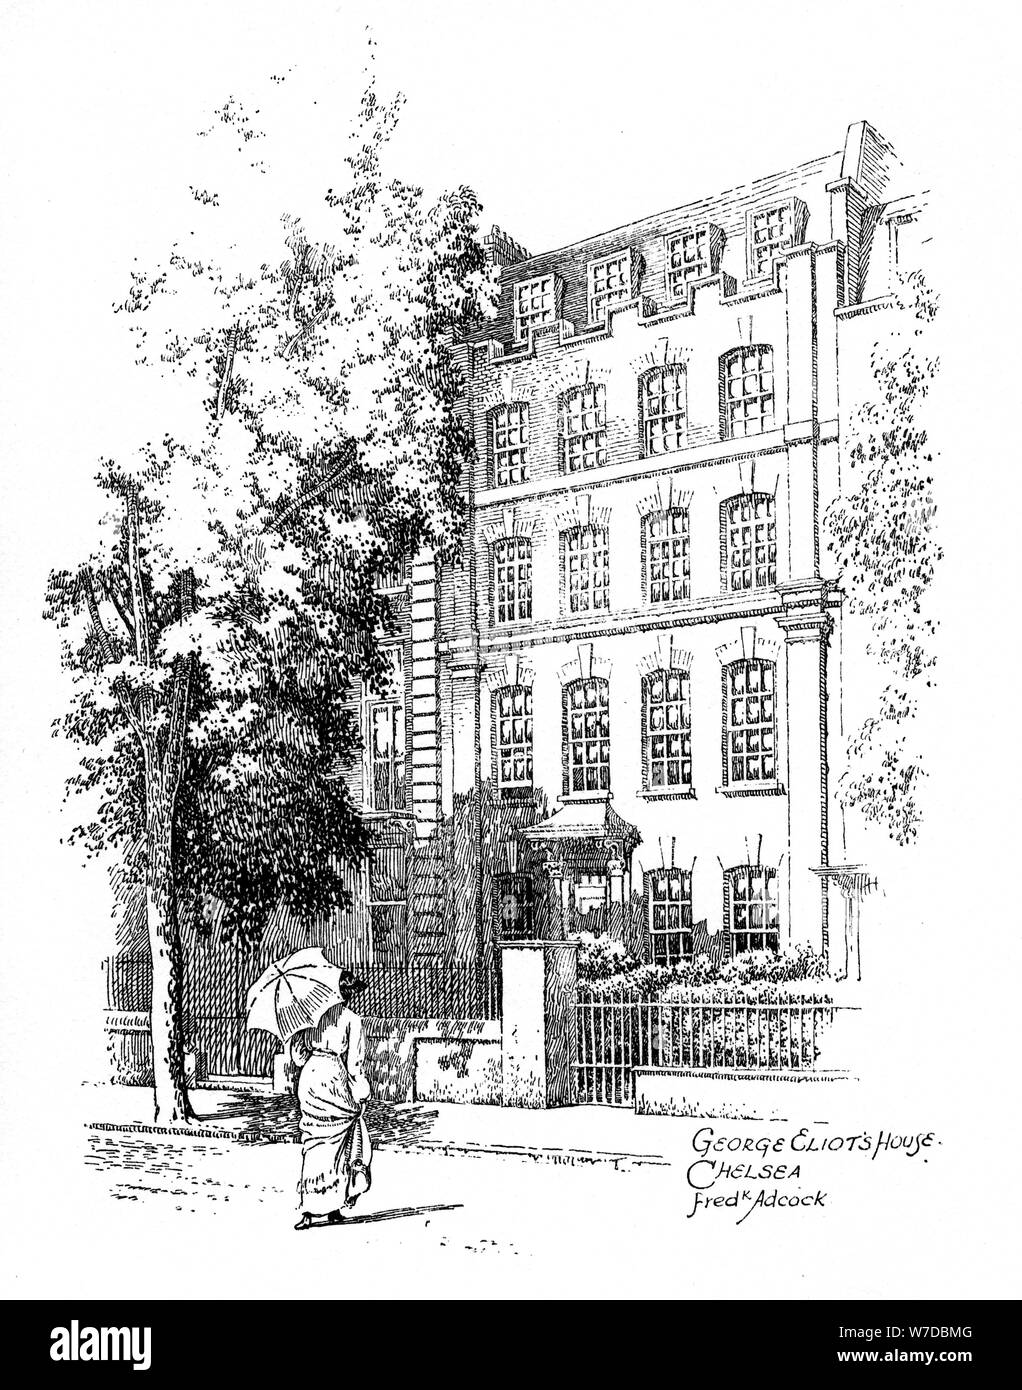 George Eliot's house, a Chelsea, Londra, 1912. Artista: Federico Adcock Foto Stock